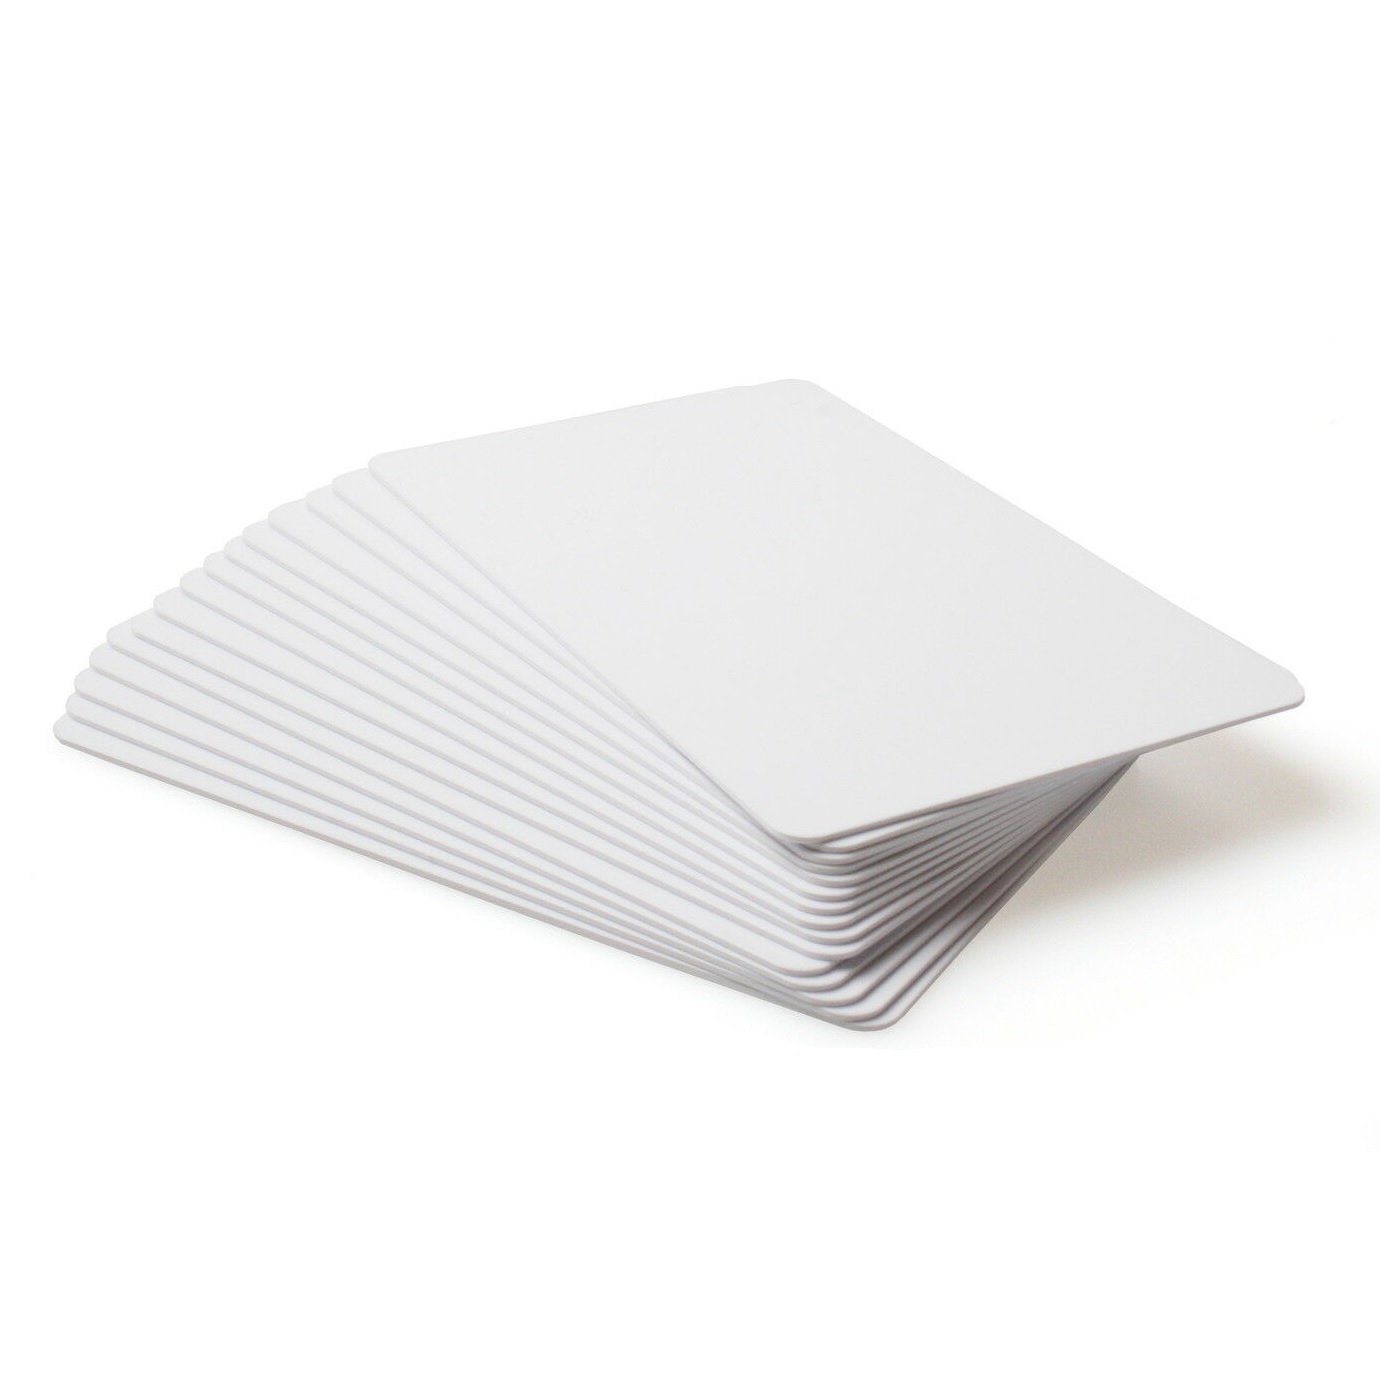 500 x 0.76mm Plain White Composite Card